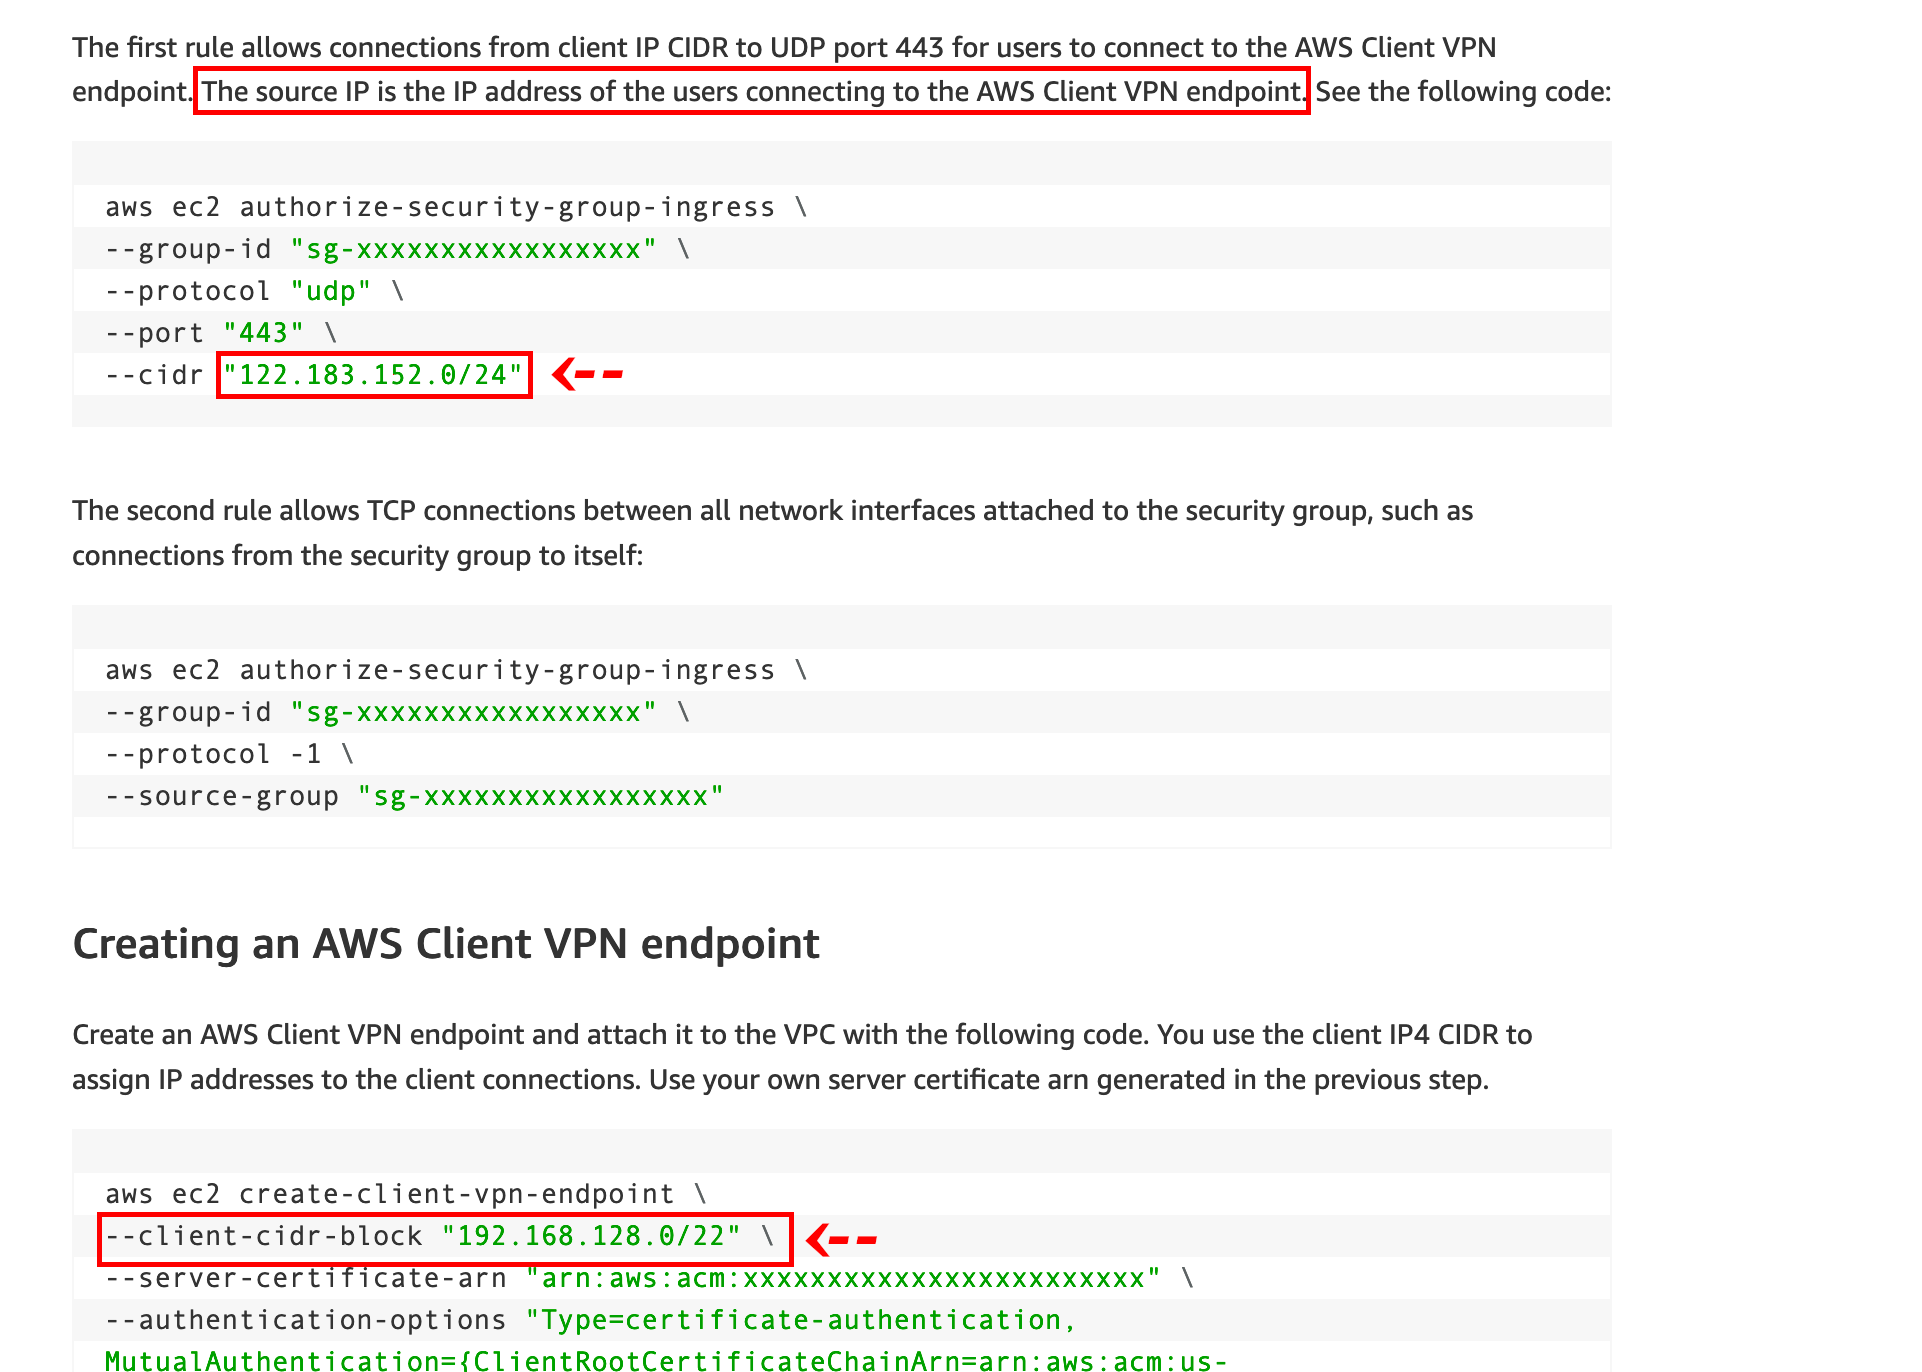 Screenshot from AWS guide highlighting IP mismatch